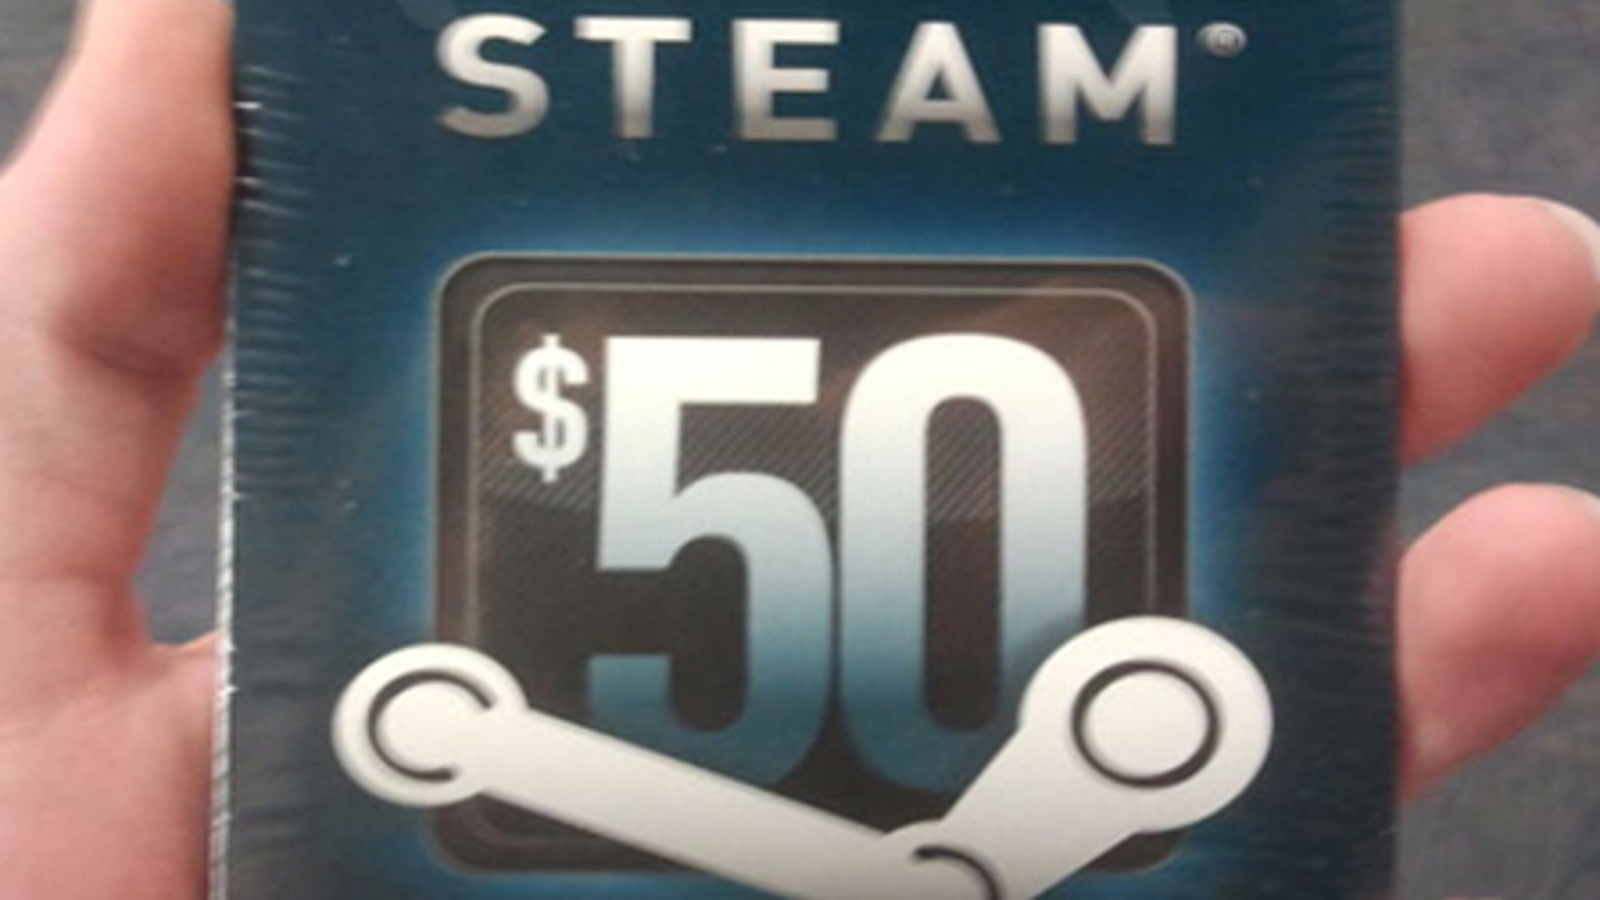 GameStop now sells Steam Wallet cards in the U.S. – Destructoid